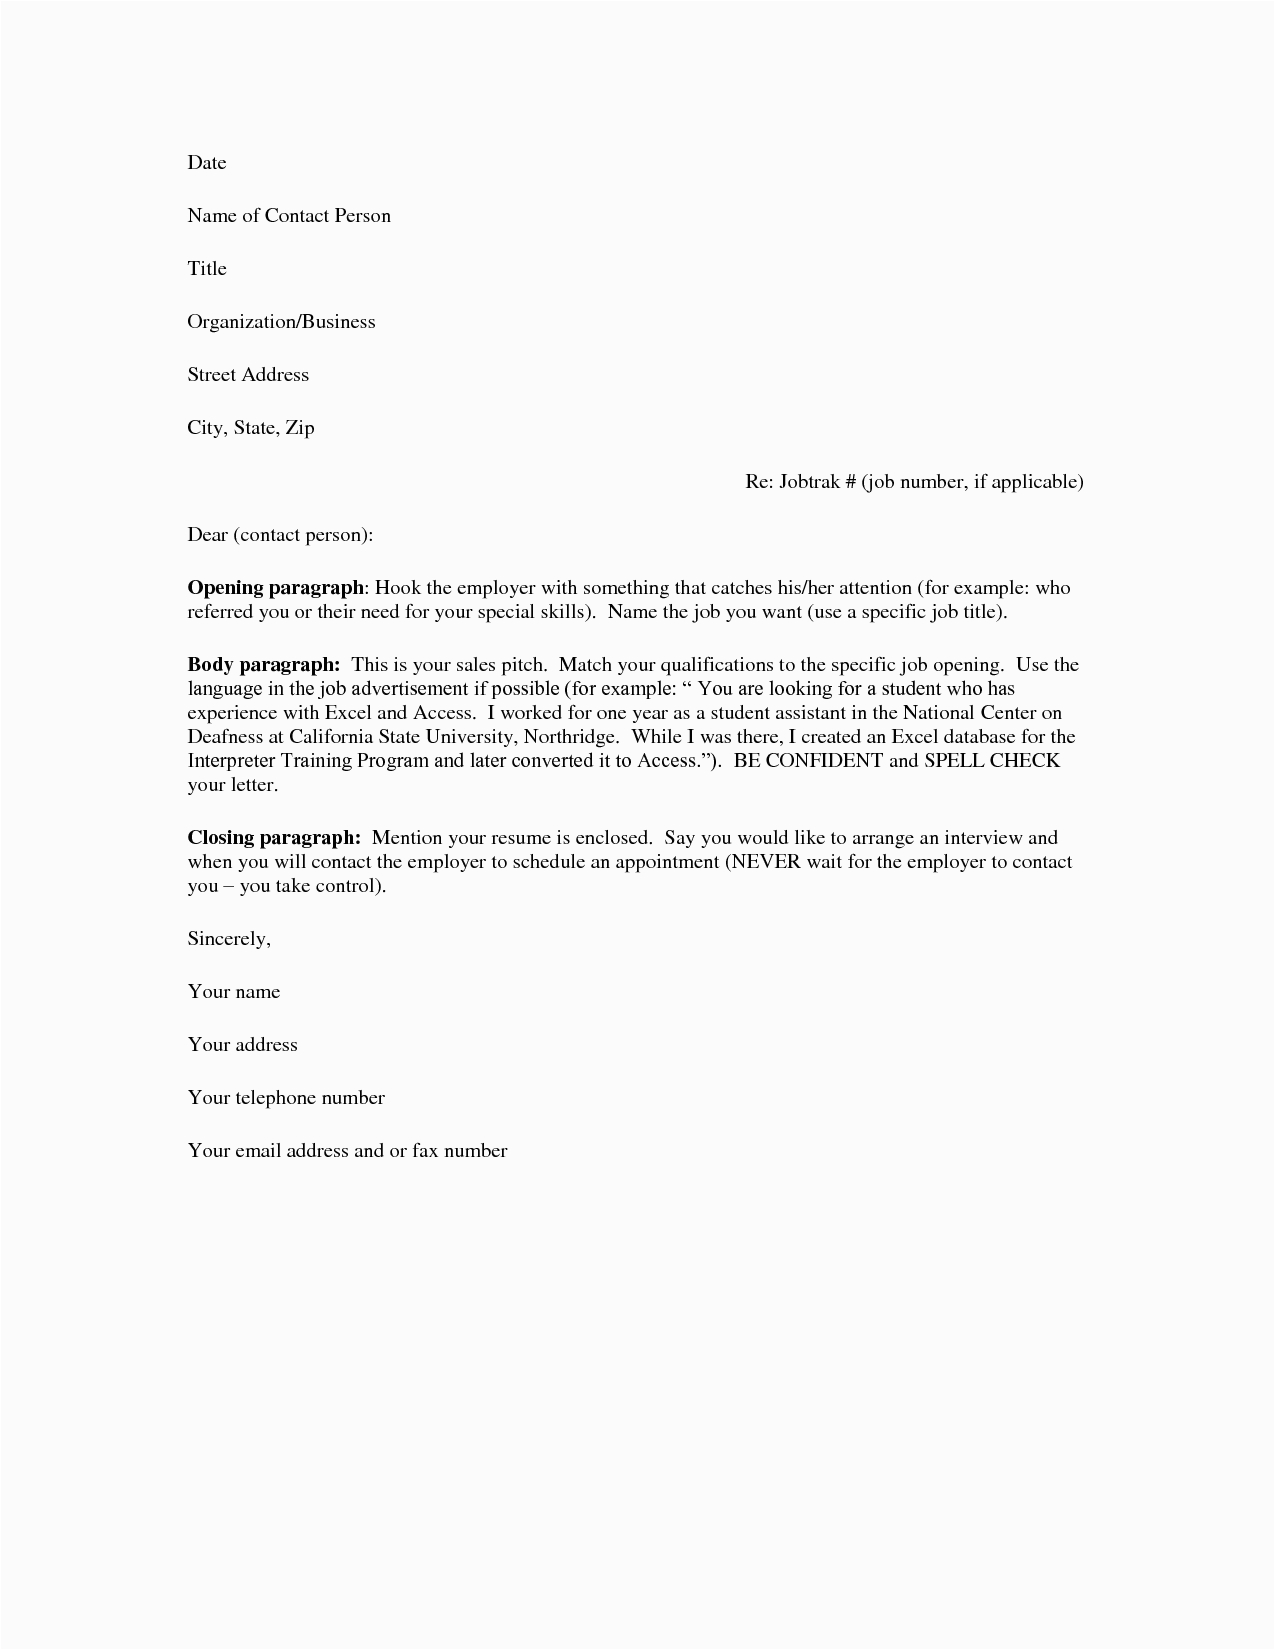 Sample formal Letter Template with Resume Cover Letter for Resume Fotolip